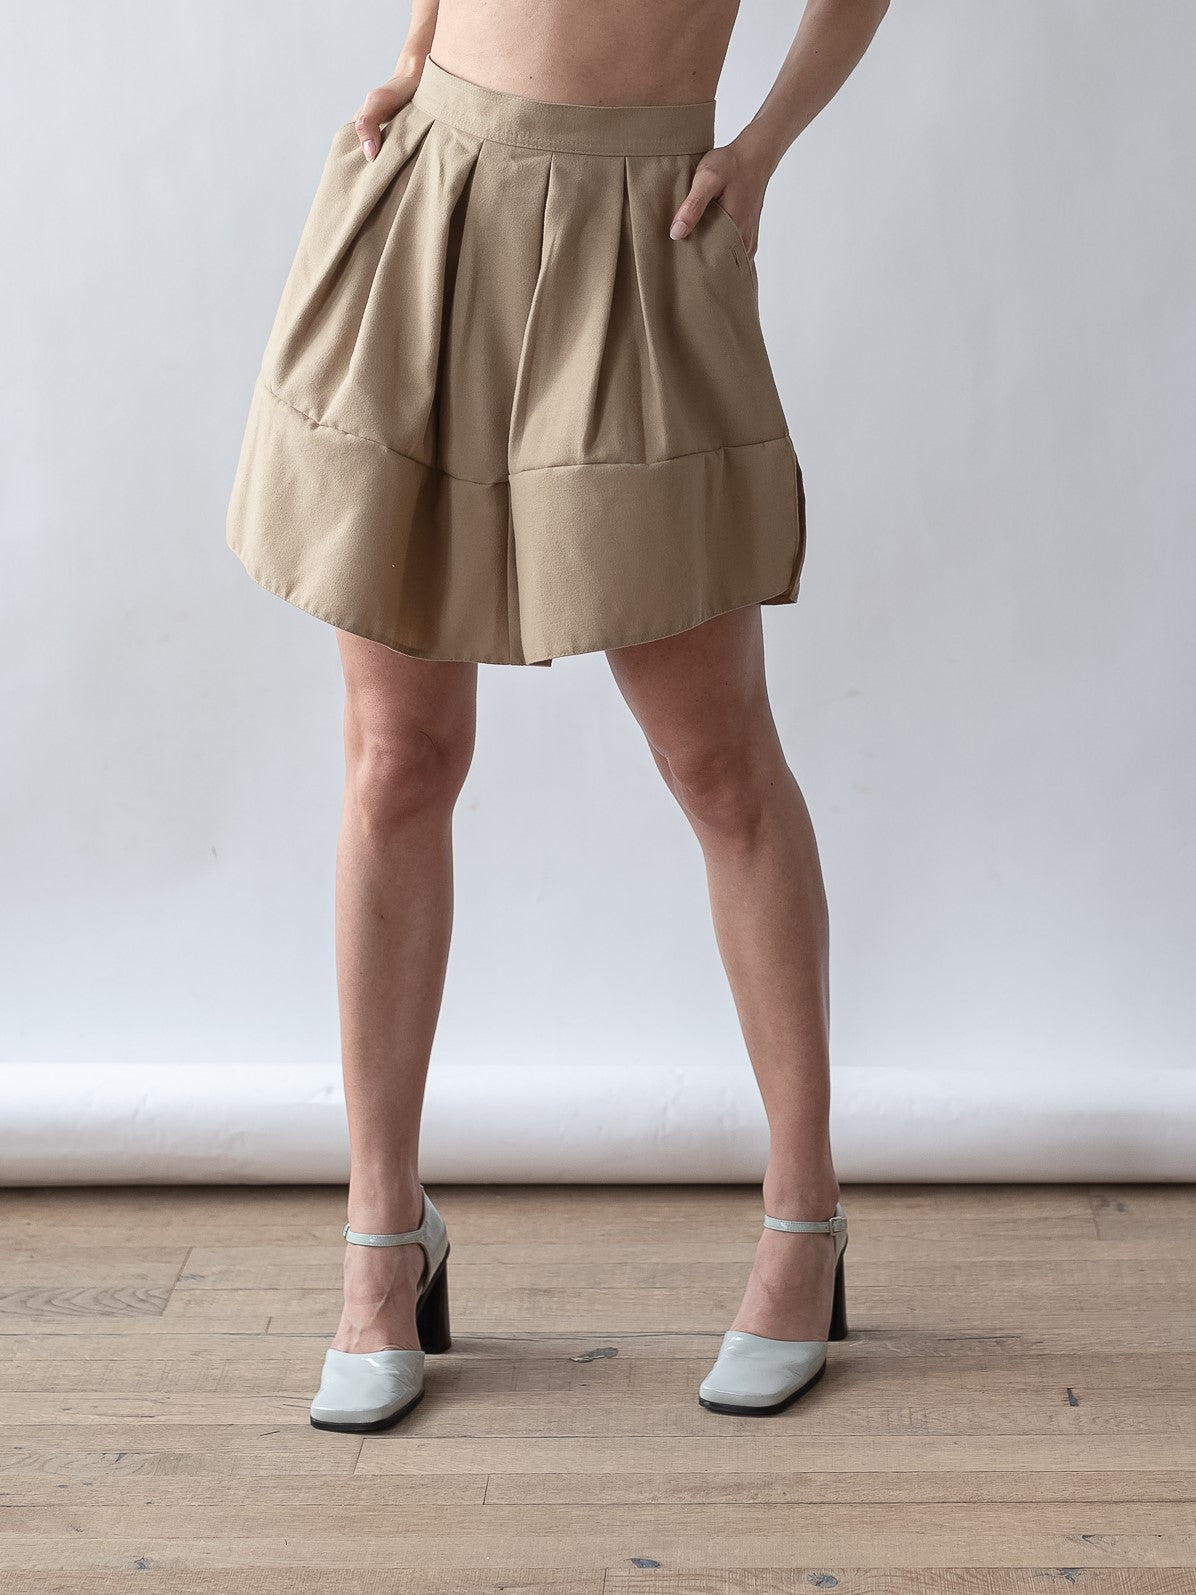 Vintage 80's Reworked Camel Mini Tennis Skirt (M)